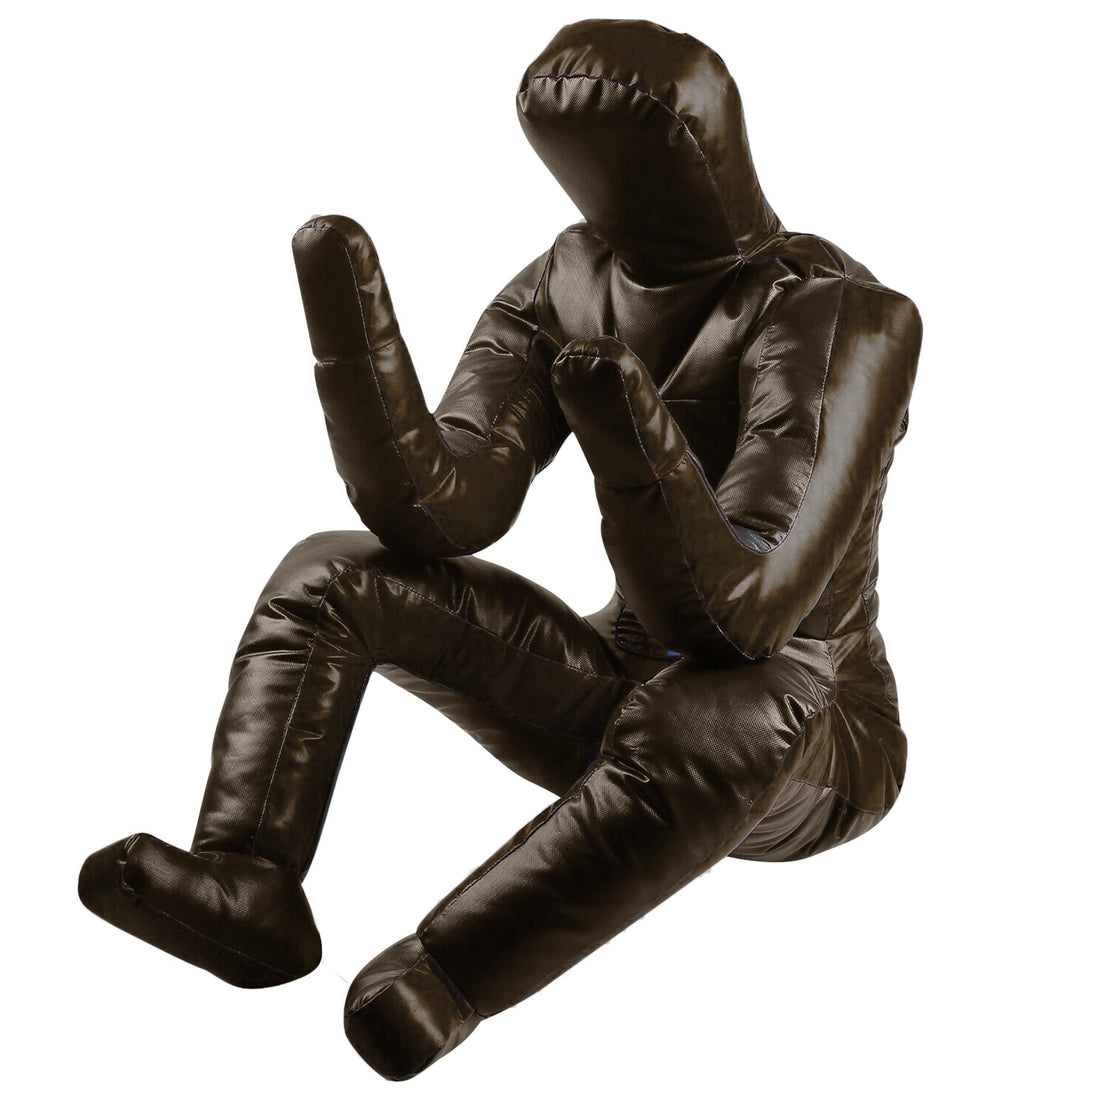 Special Limited Edition Brazilian Jiu Jitsu Premium Leather Grappling Dummy Boxing judo MMA - Dark Brown- Professional Range - DEFENDING POSITION 170cm